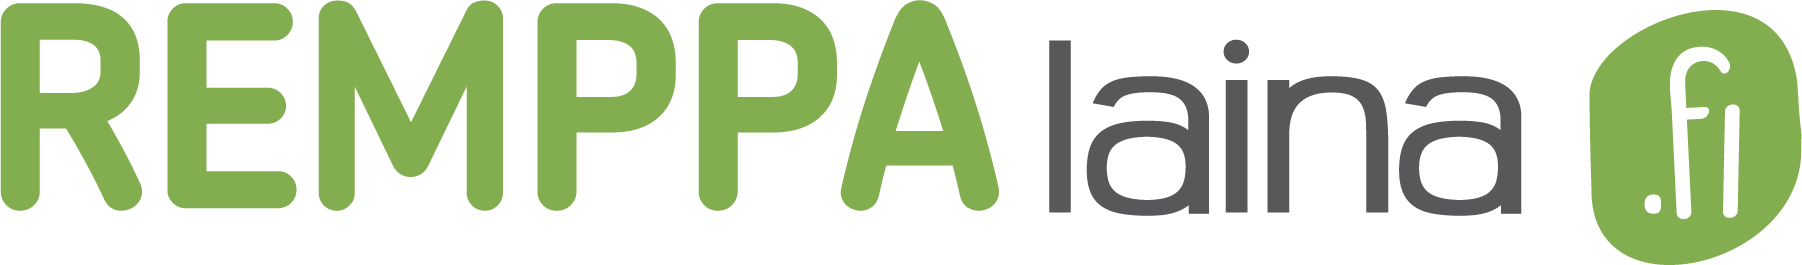 Remppalaina logo